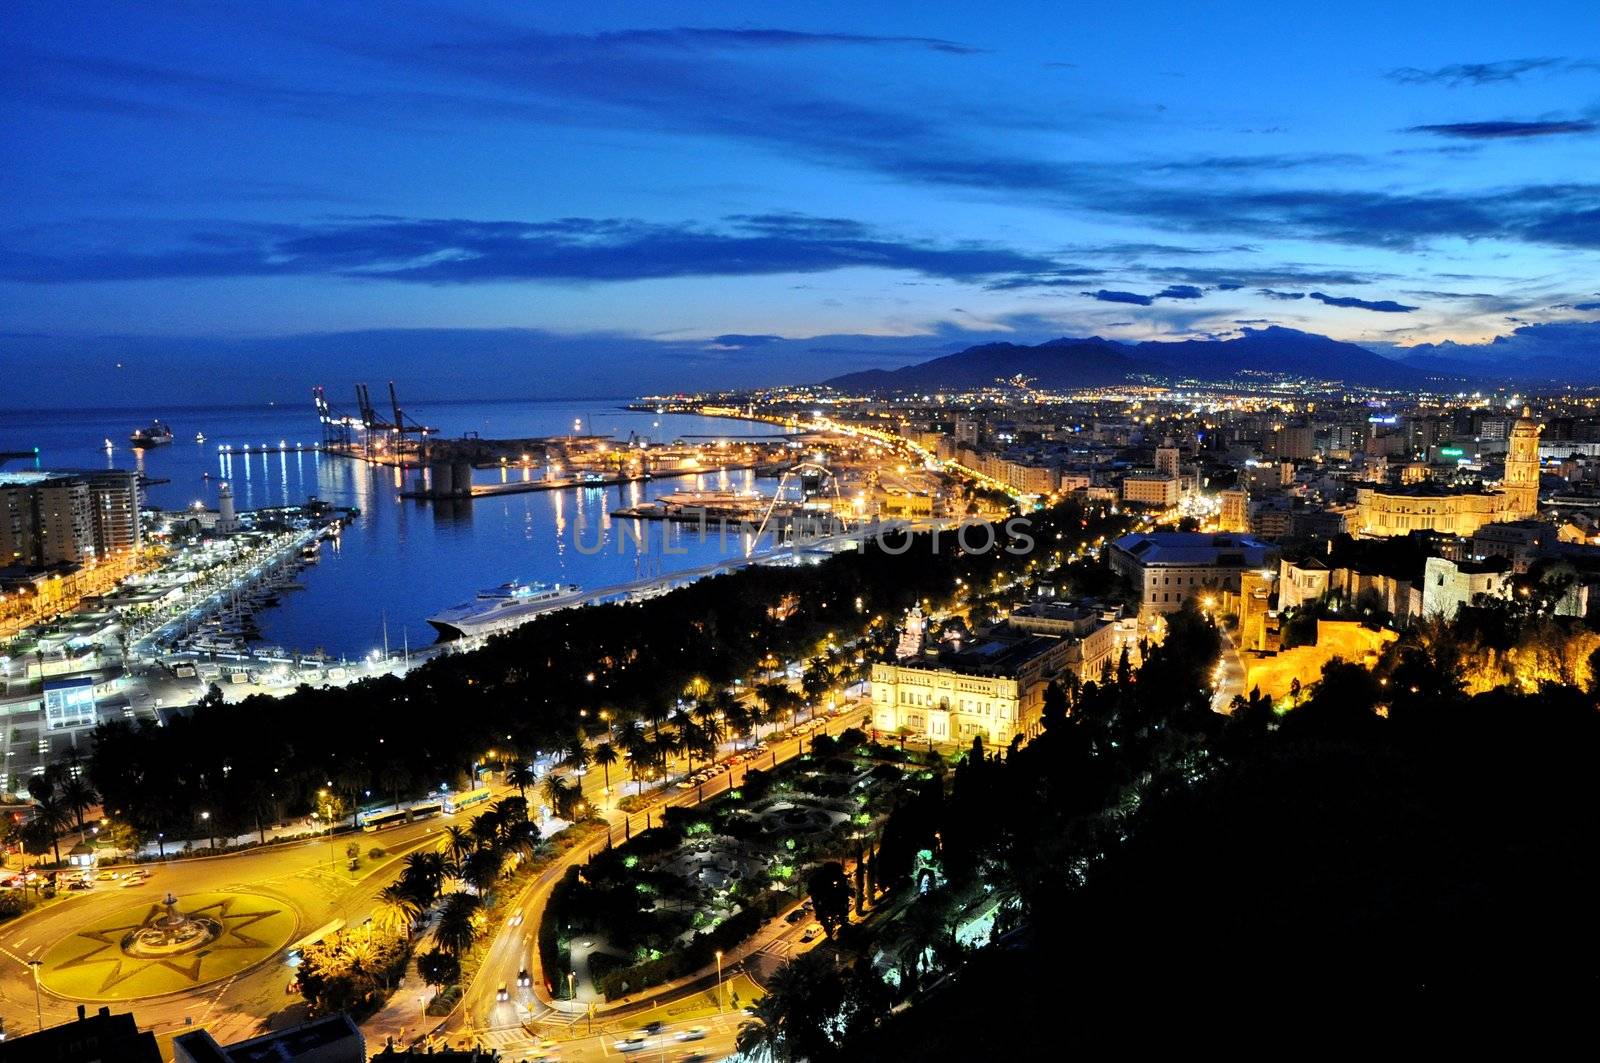 City of Malga, Spain by night